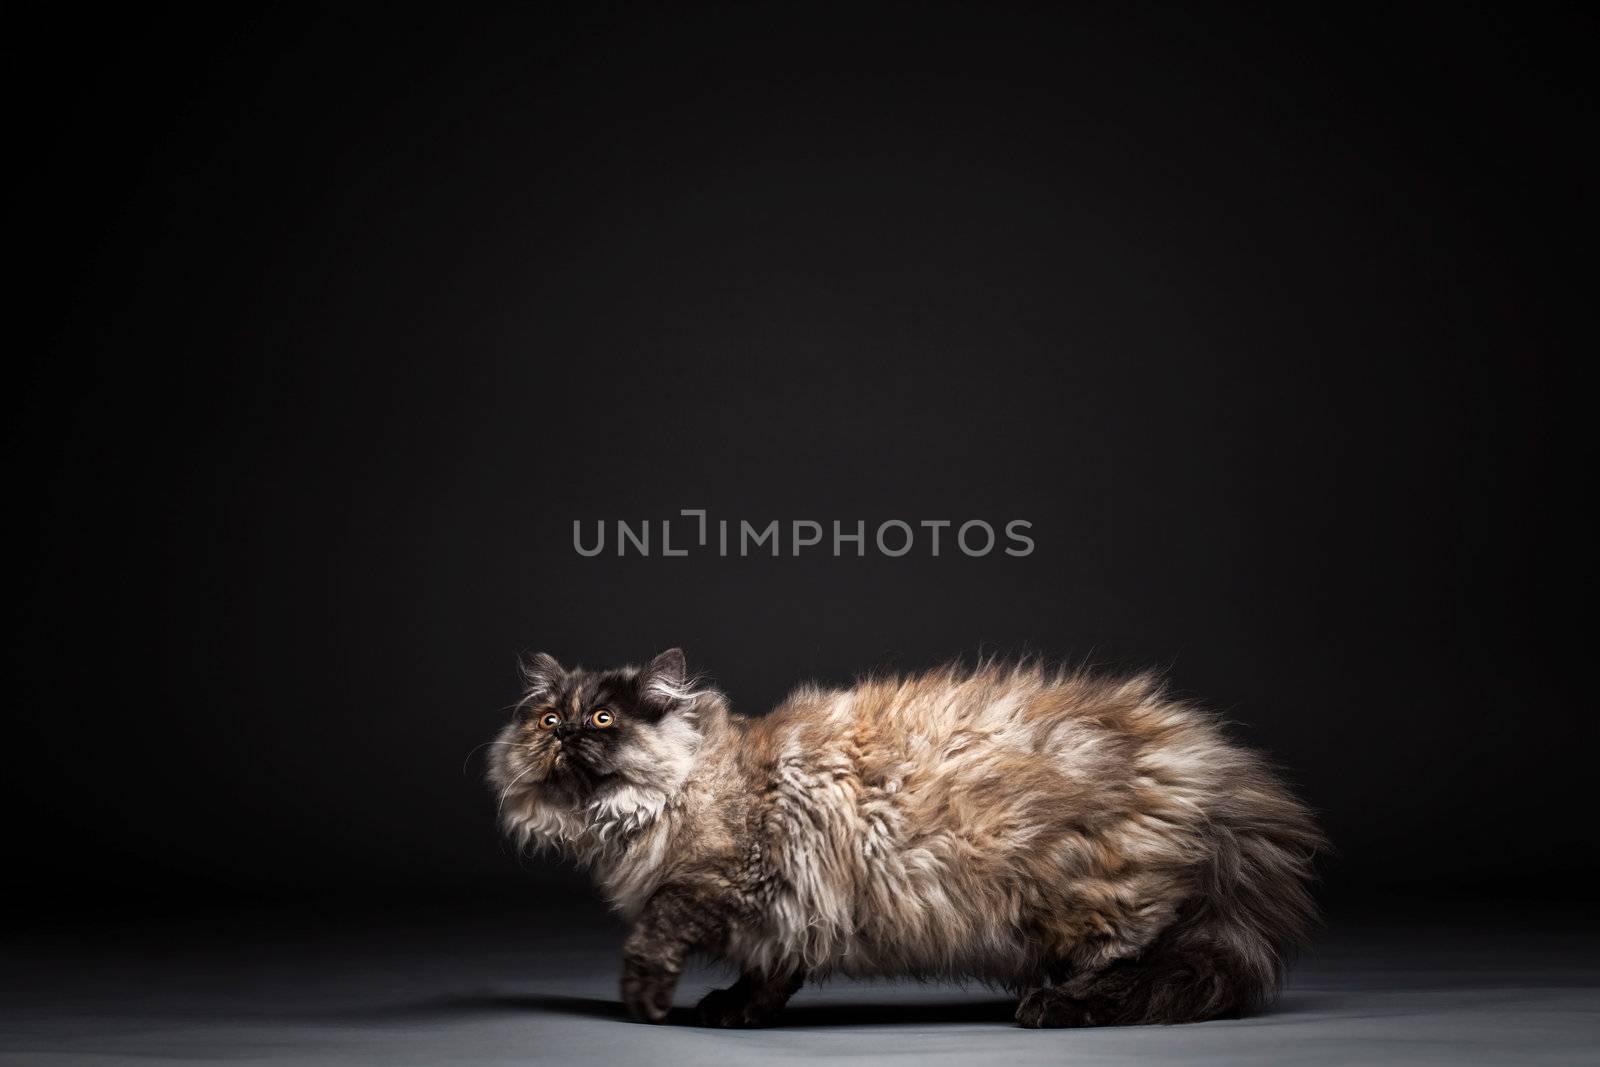 Chincilla Persial Cat by kokimk